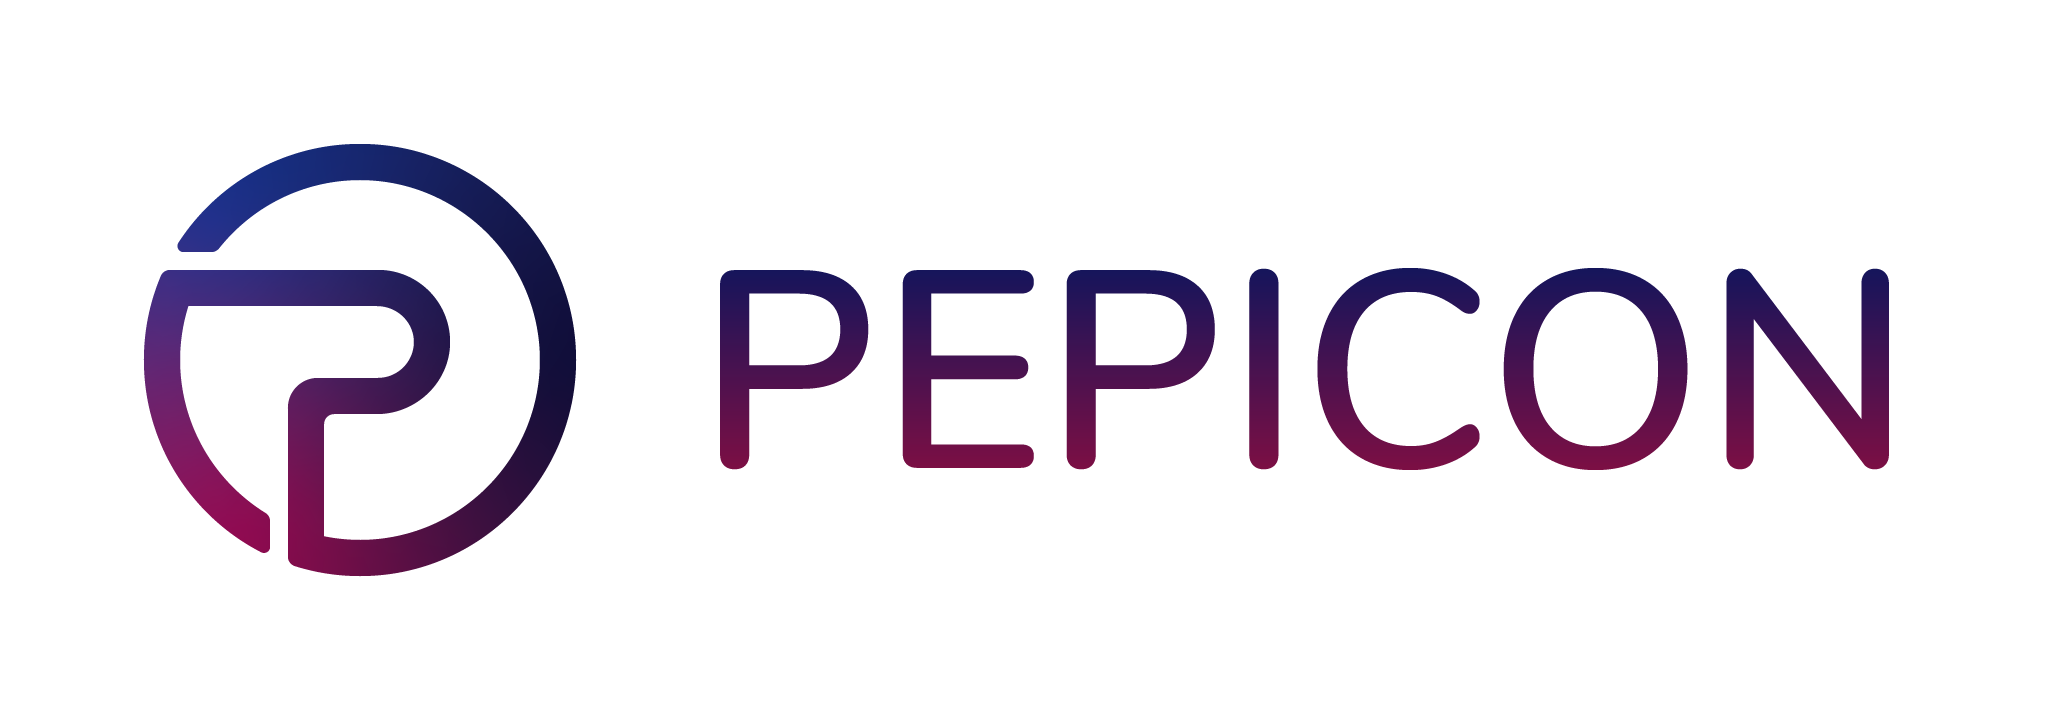 pepicon_logo_standard